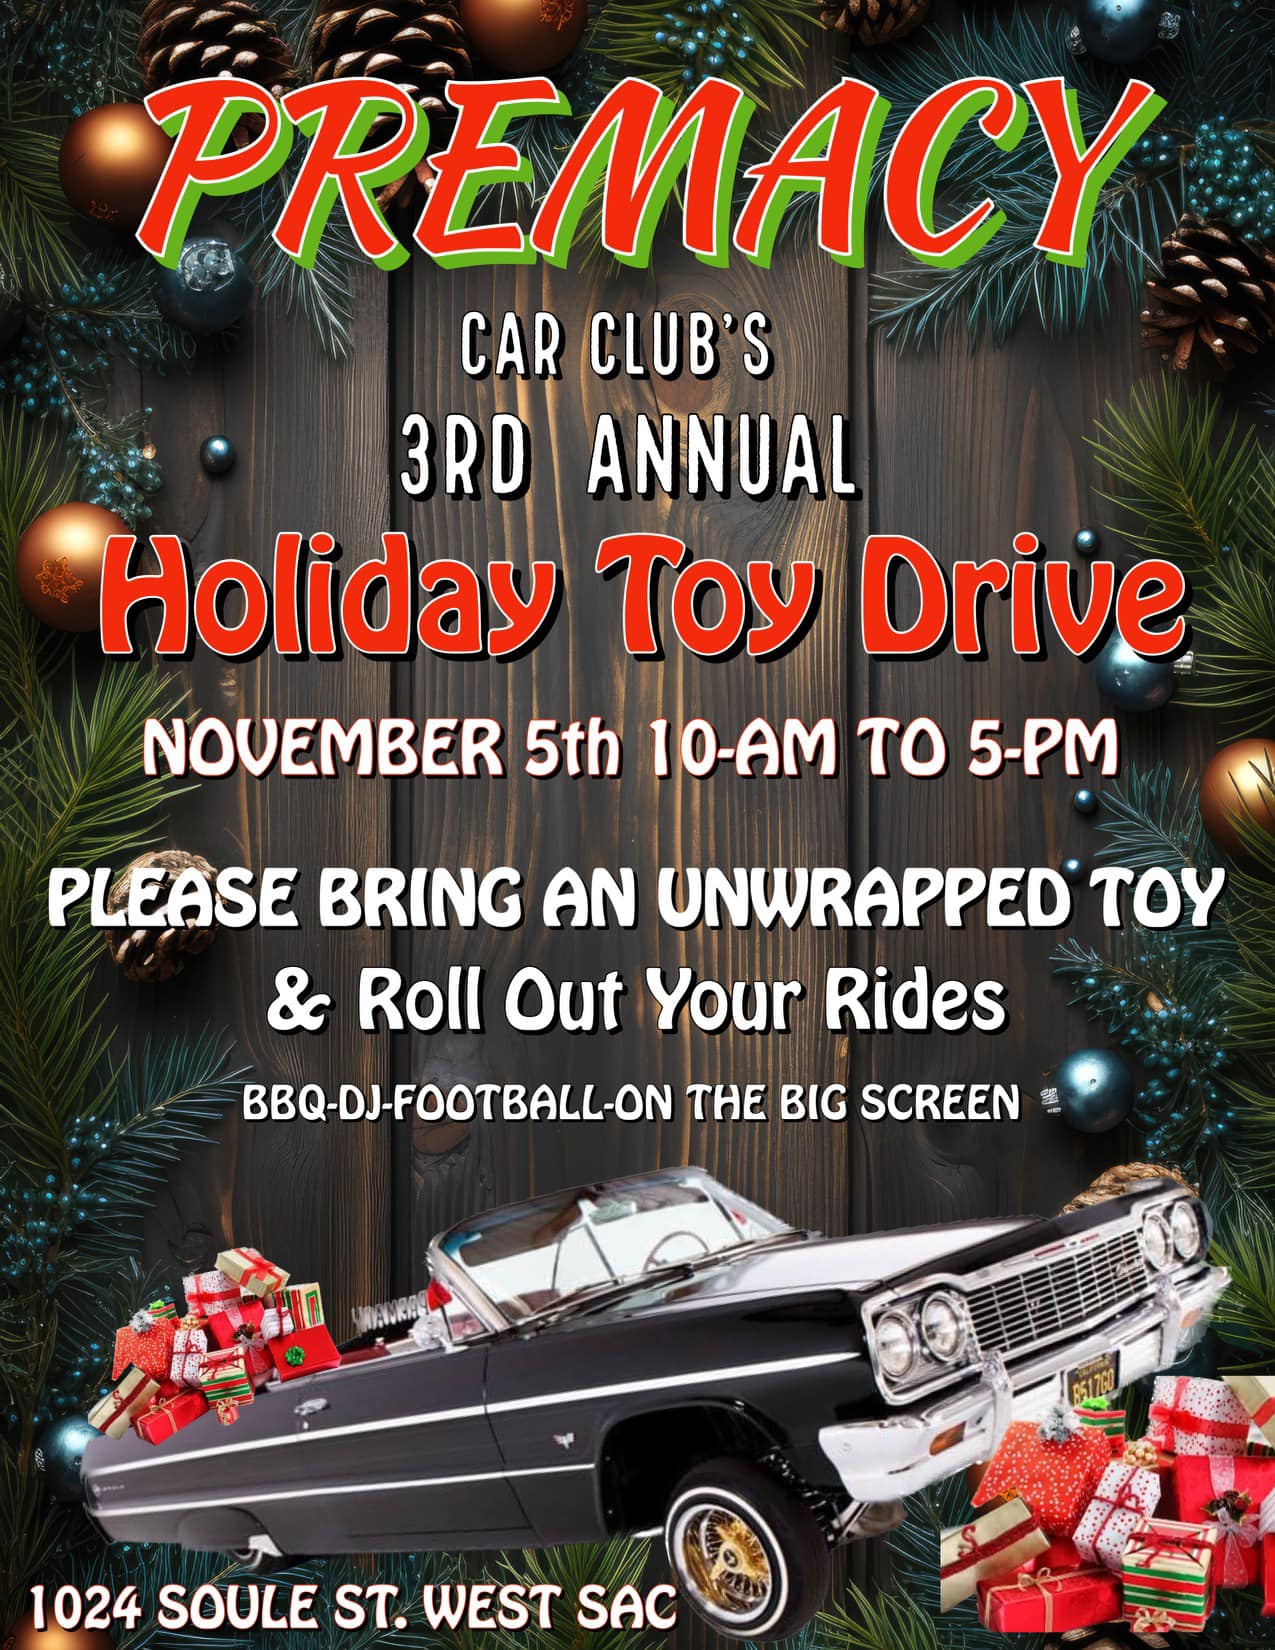 Premacy Car Club's Toy Drive